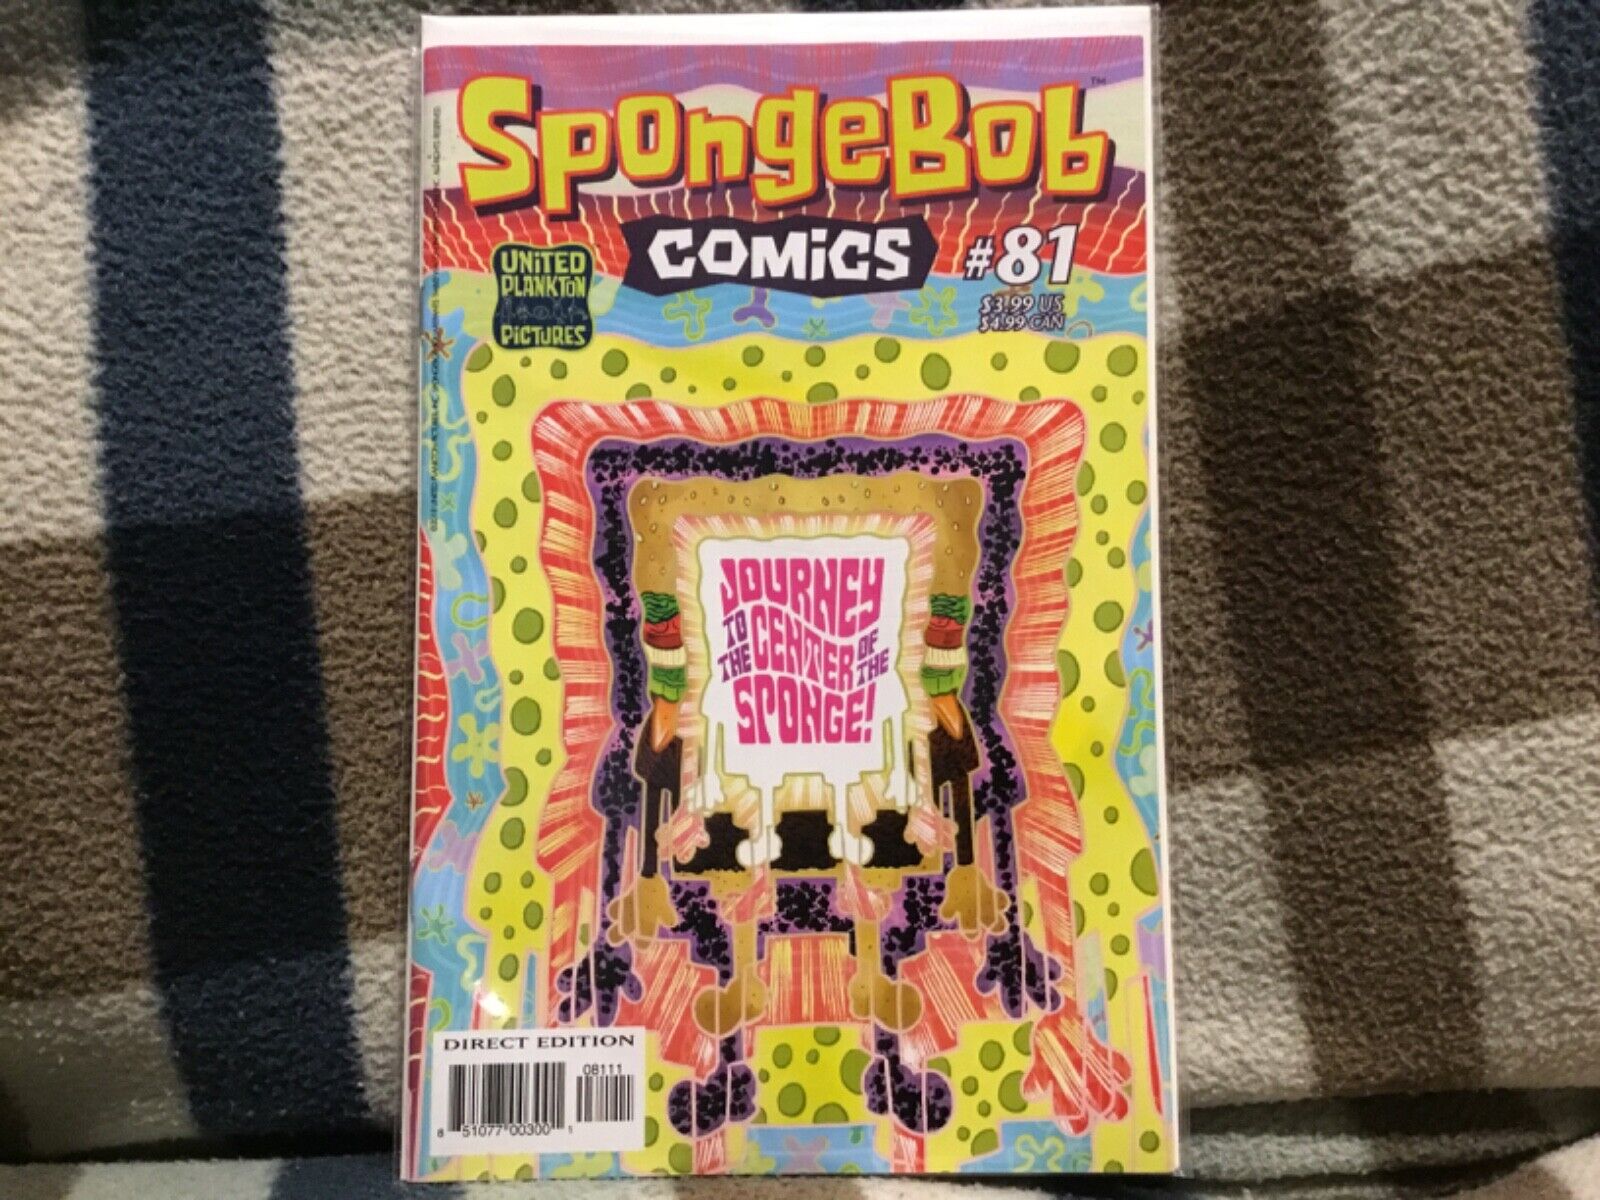 Spongebob Comics #81 United Plankton Pictures 2018